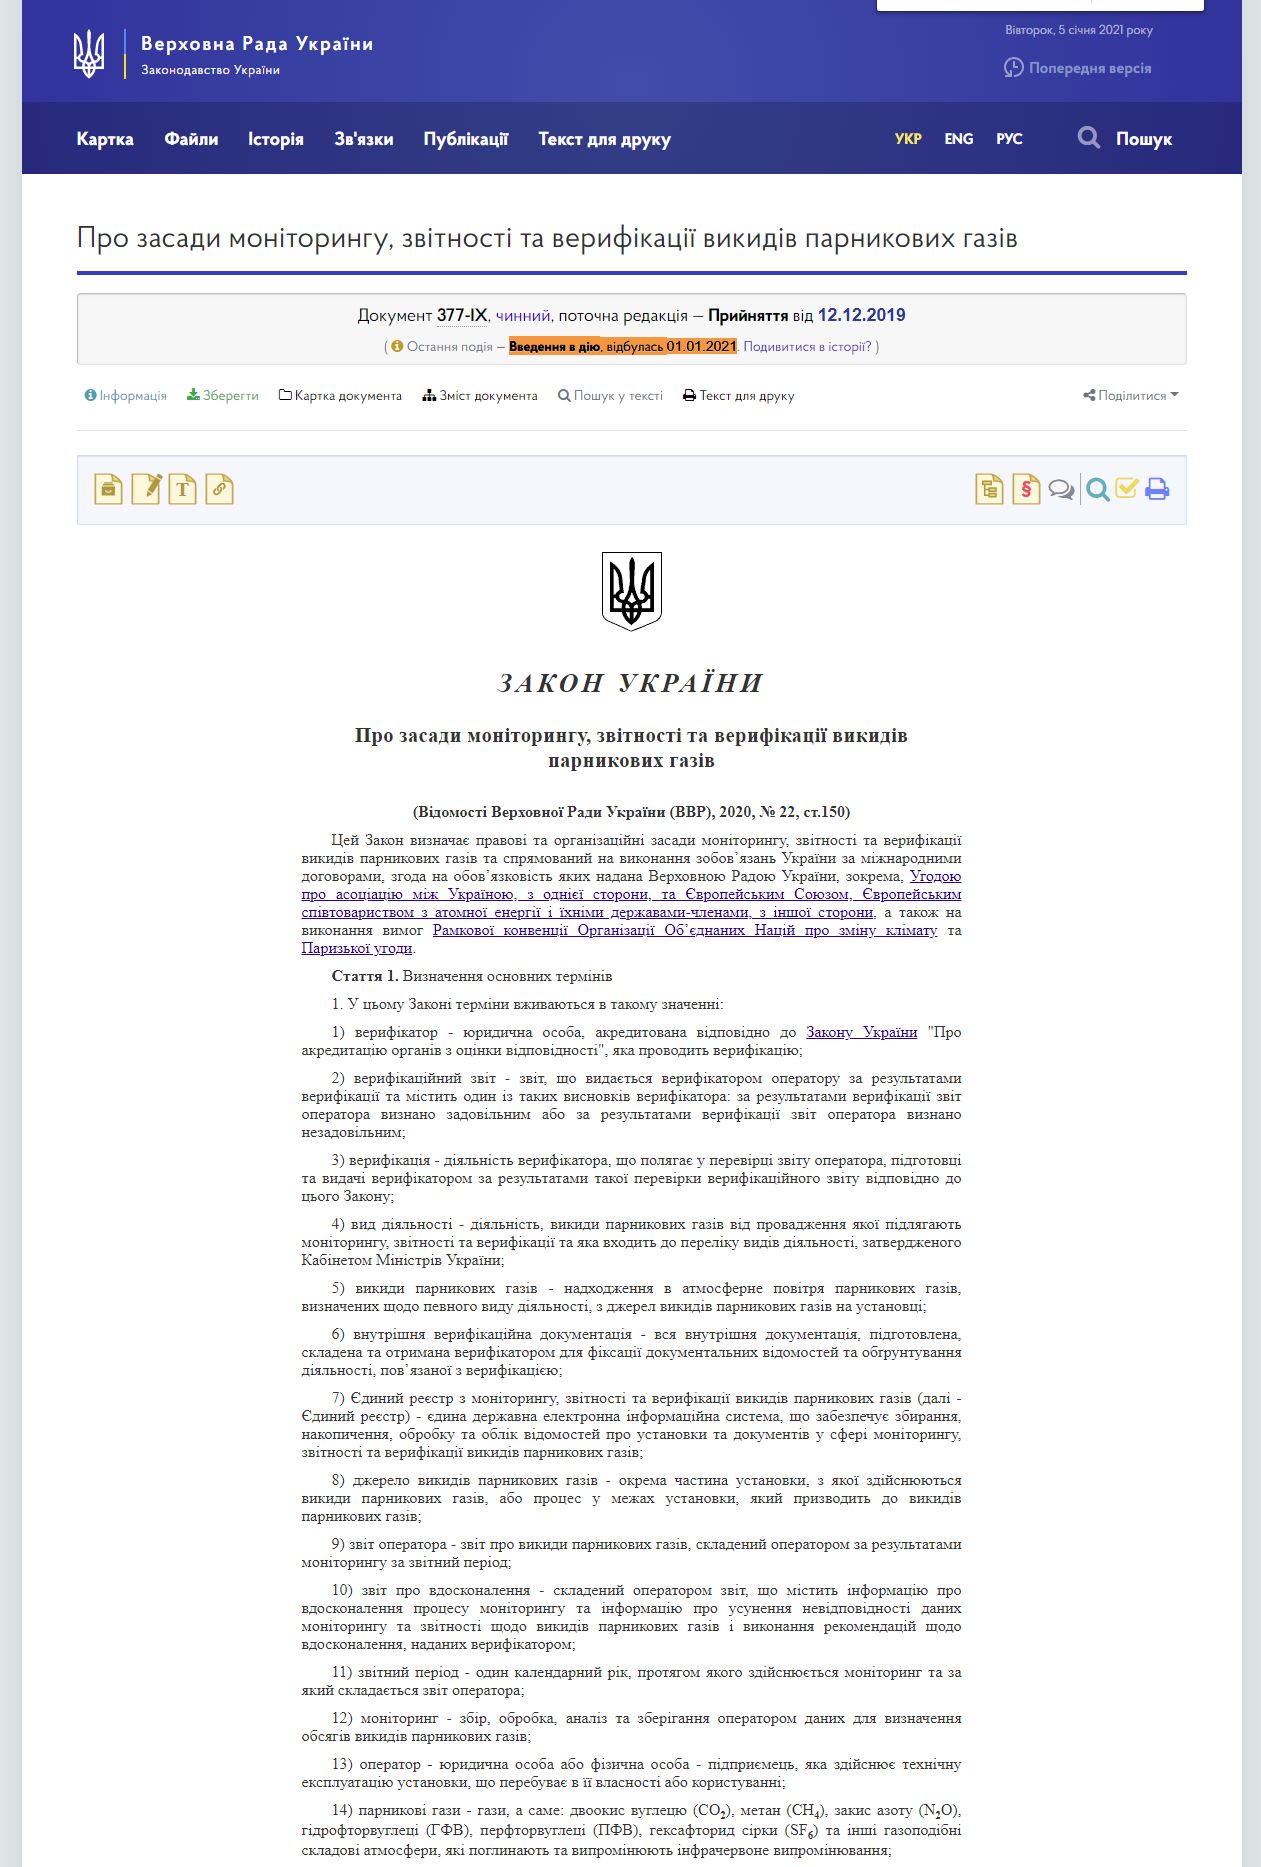 https://zakon.rada.gov.ua/laws/show/377-20#Text